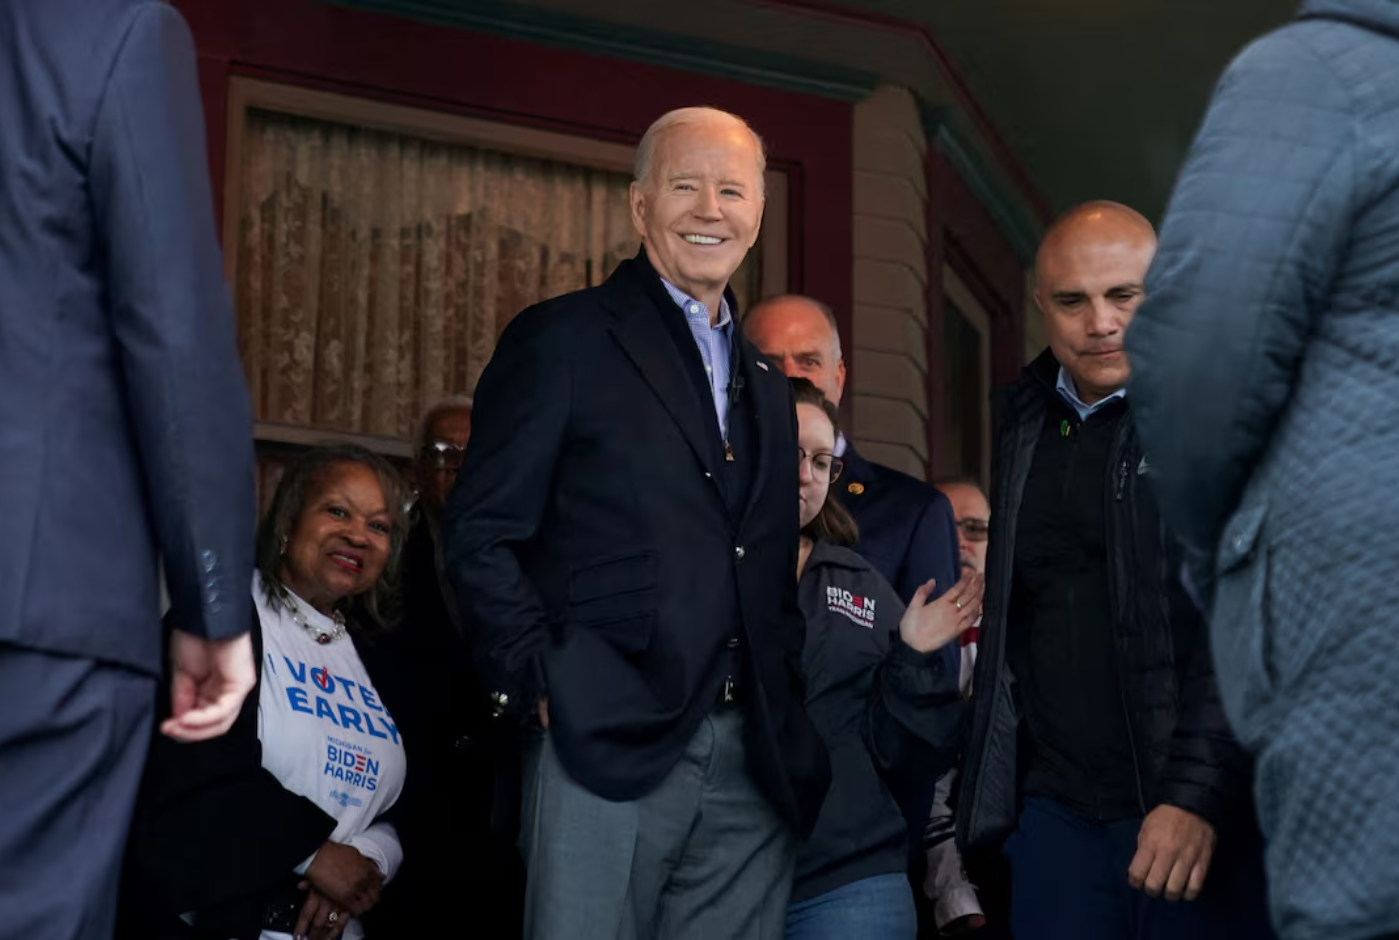 Biden campaign raises over $53 million in February fundraising